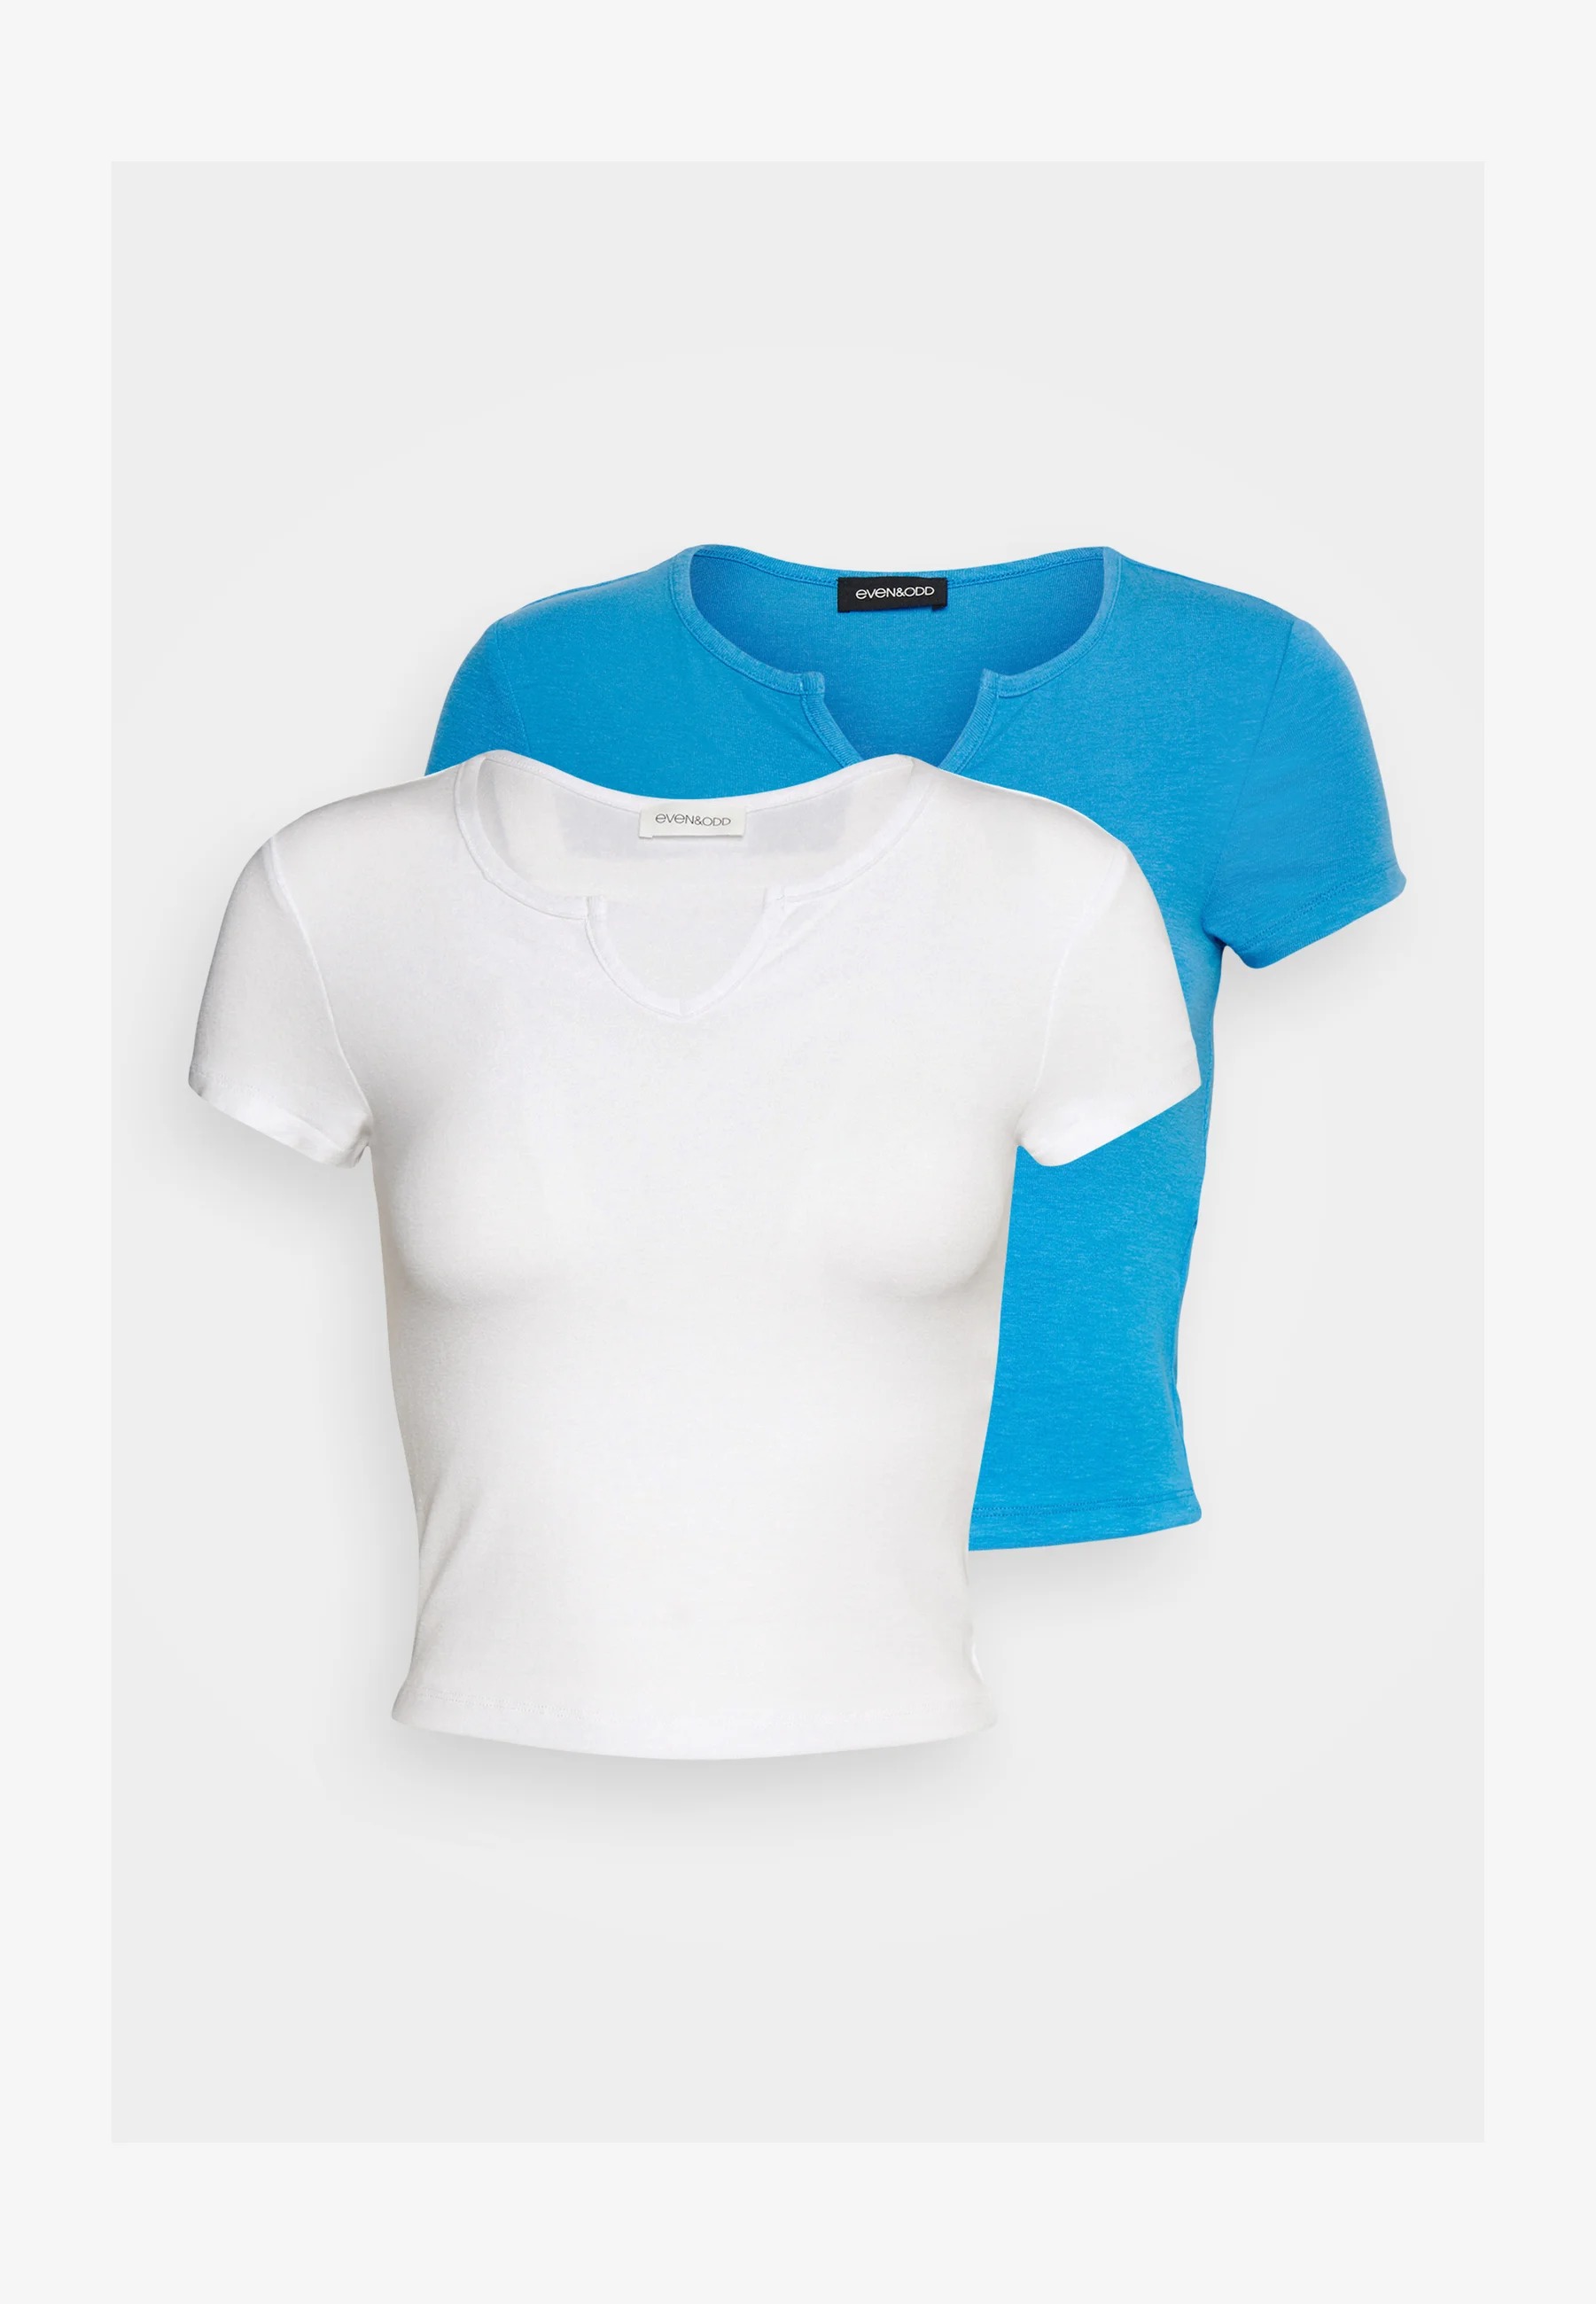 Комплект футболок Even&Odd Basic, белый, синий, 2 шт